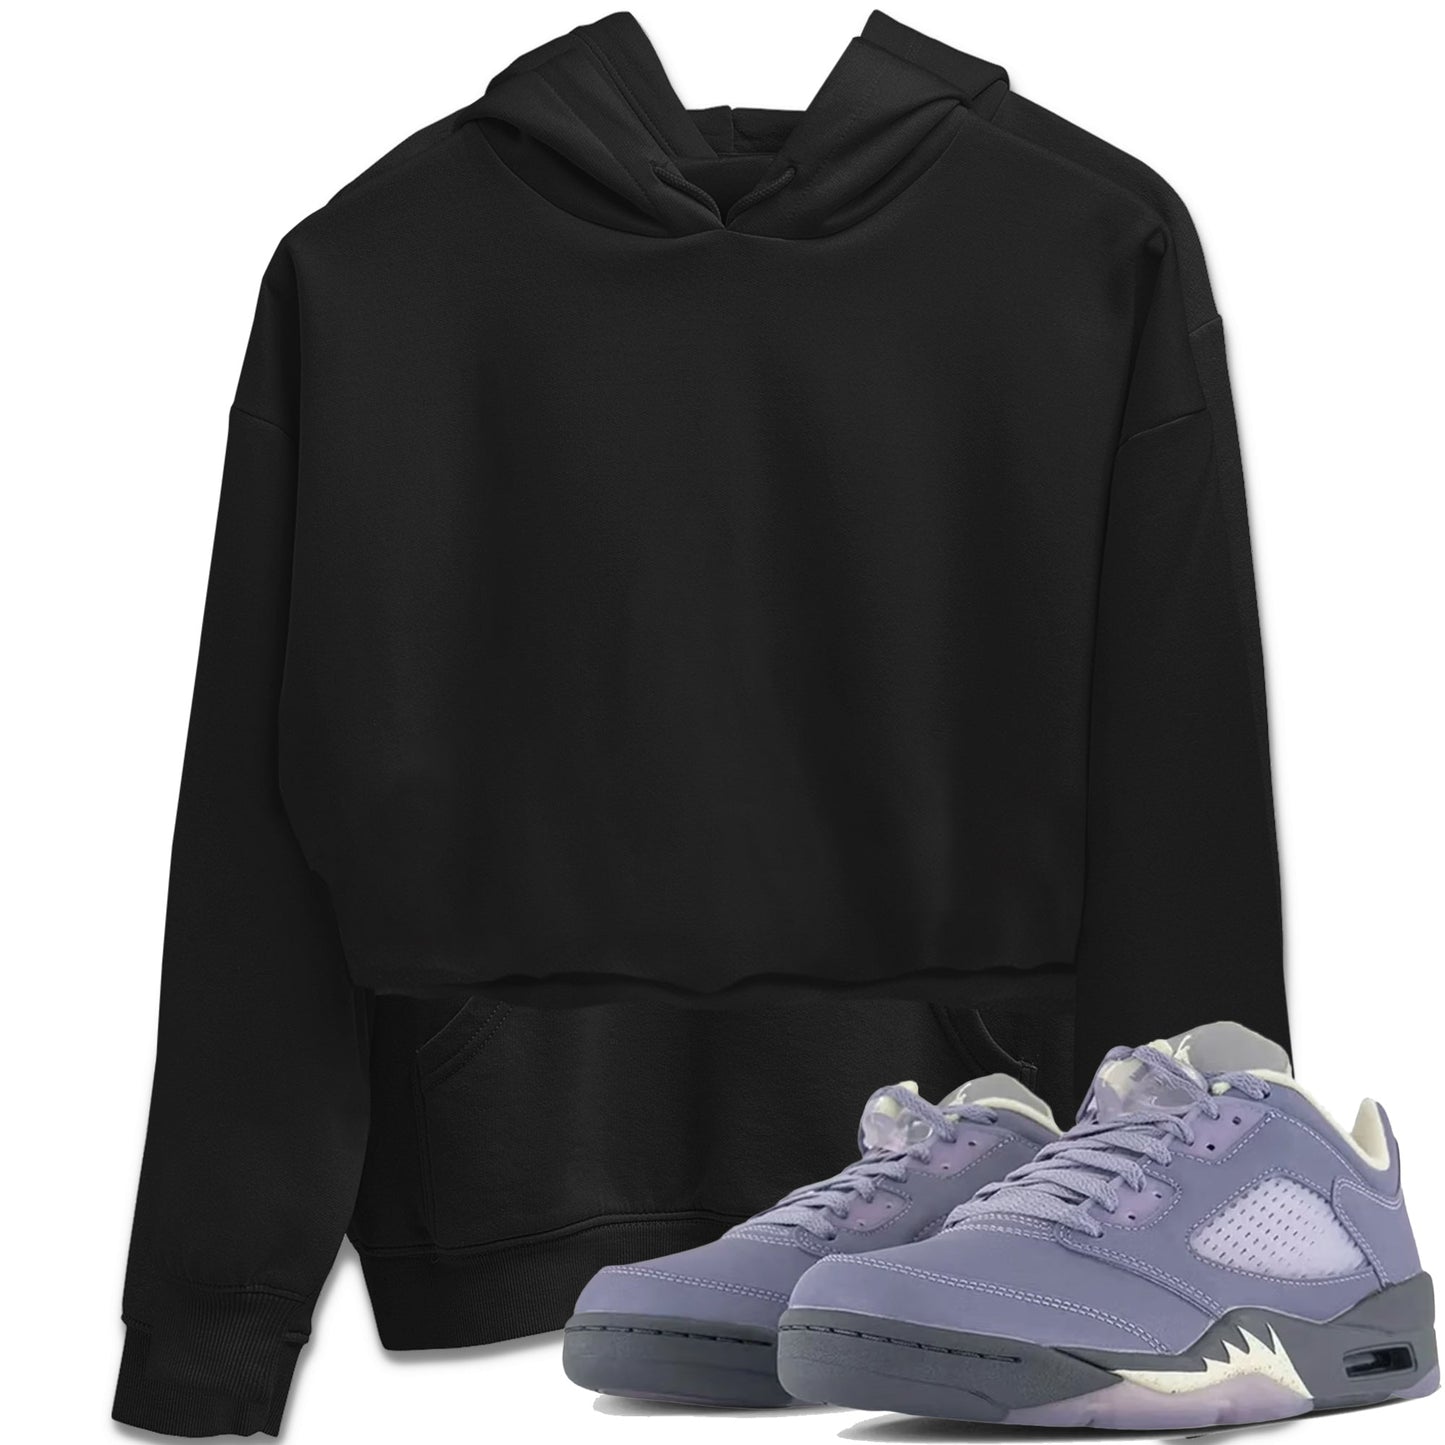 Air Jordan 5 Indigo Haze Sneaker Match Tees Shoe Box Sneaker Tees 5s Indigo Haze Sneaker Release Tees Unisex Shirts Black 2